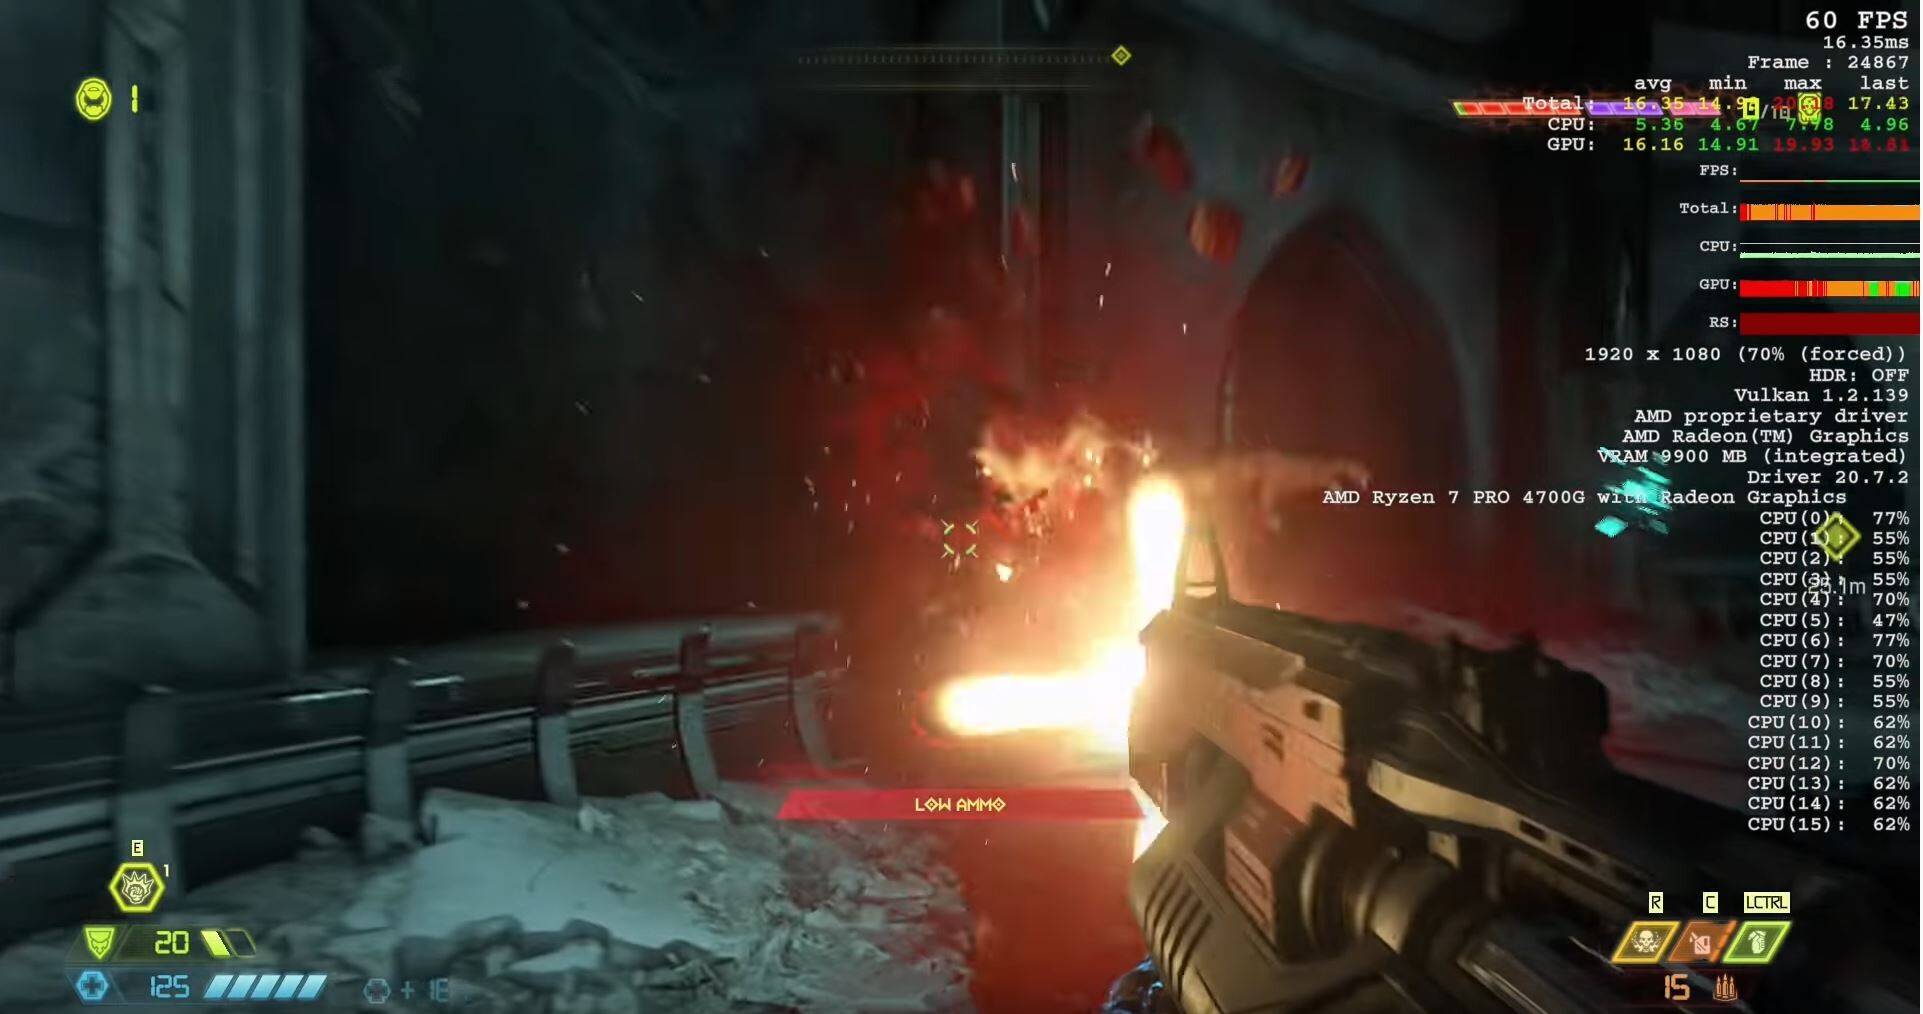 Gameplay footage from Battlefield 2042 test leaks - Xfire